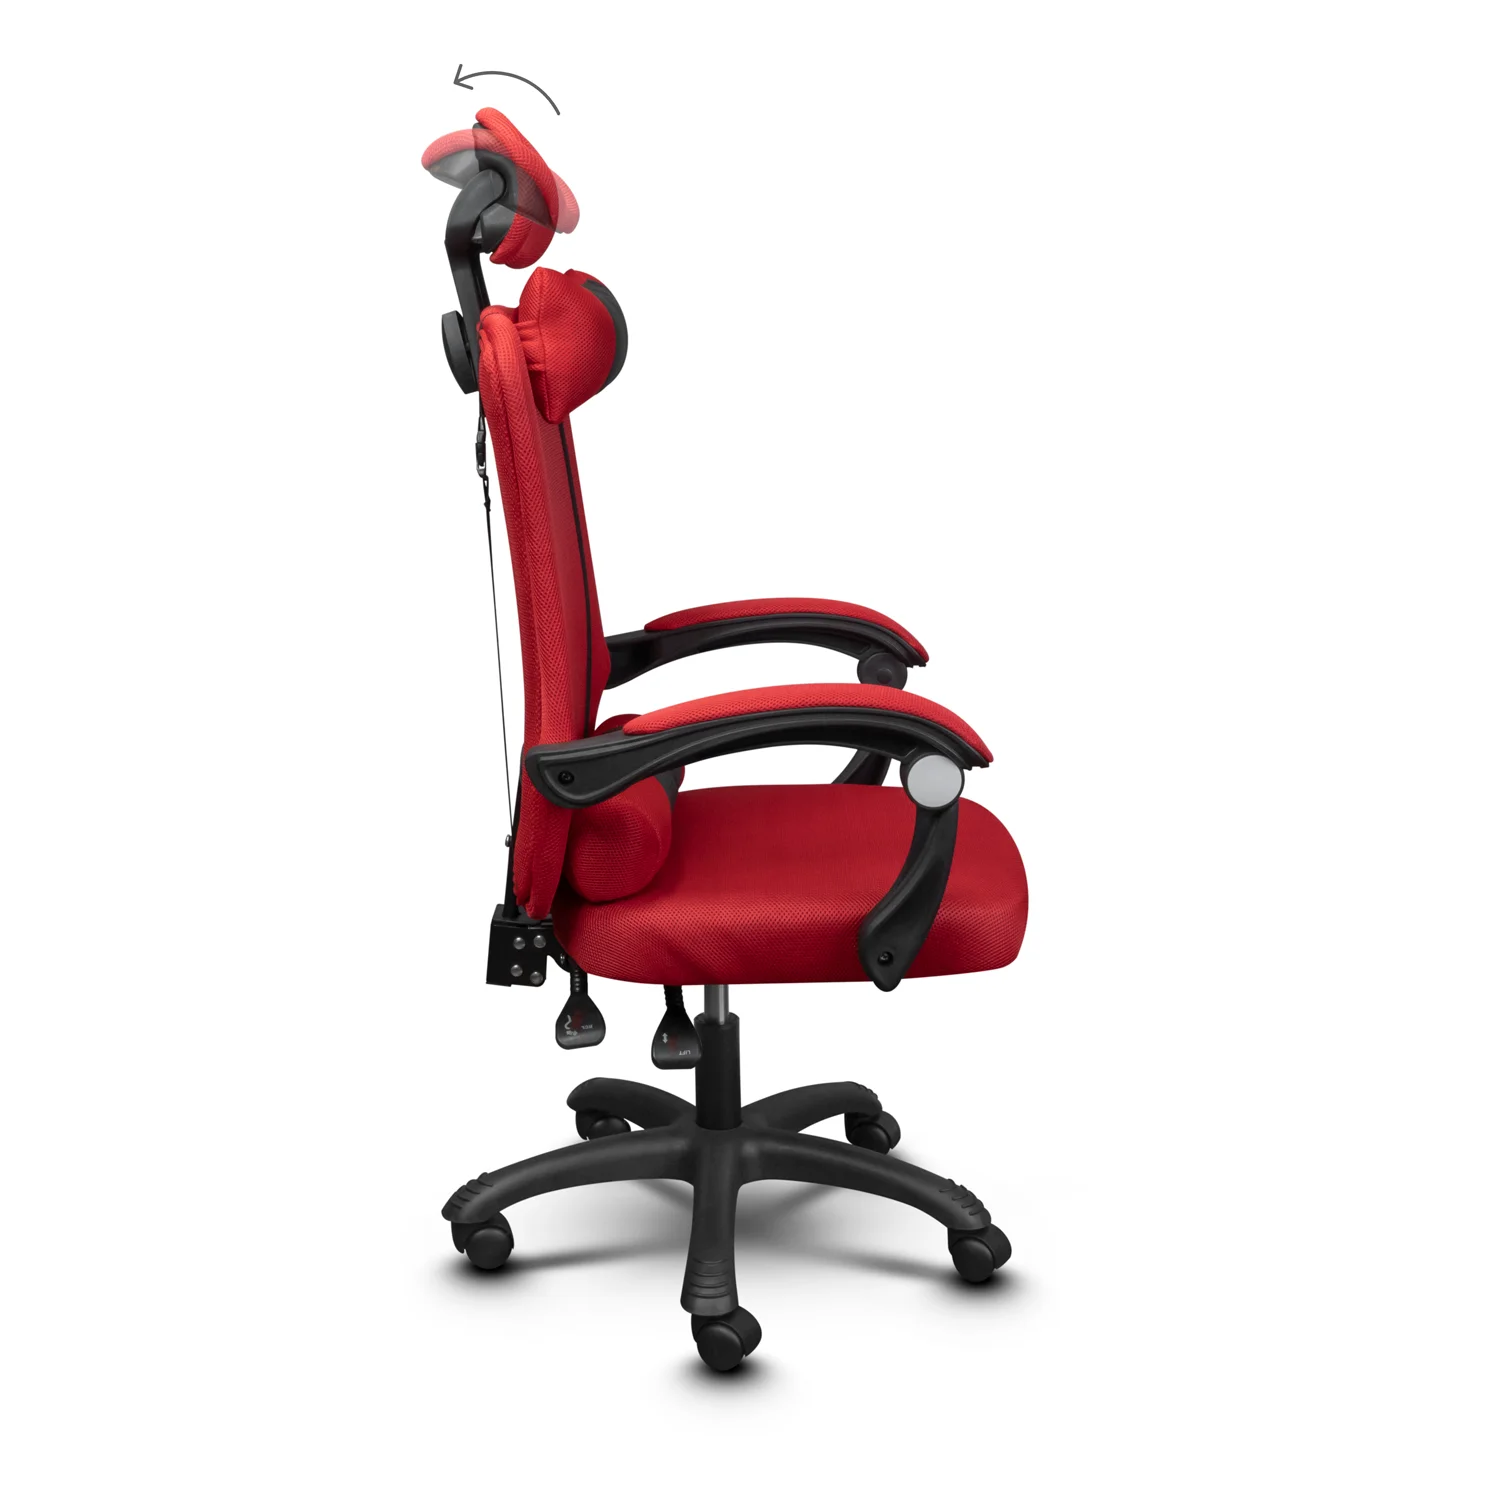 Irodai szék, forgószék piros (OFFICE-CHAIR-925-RED)